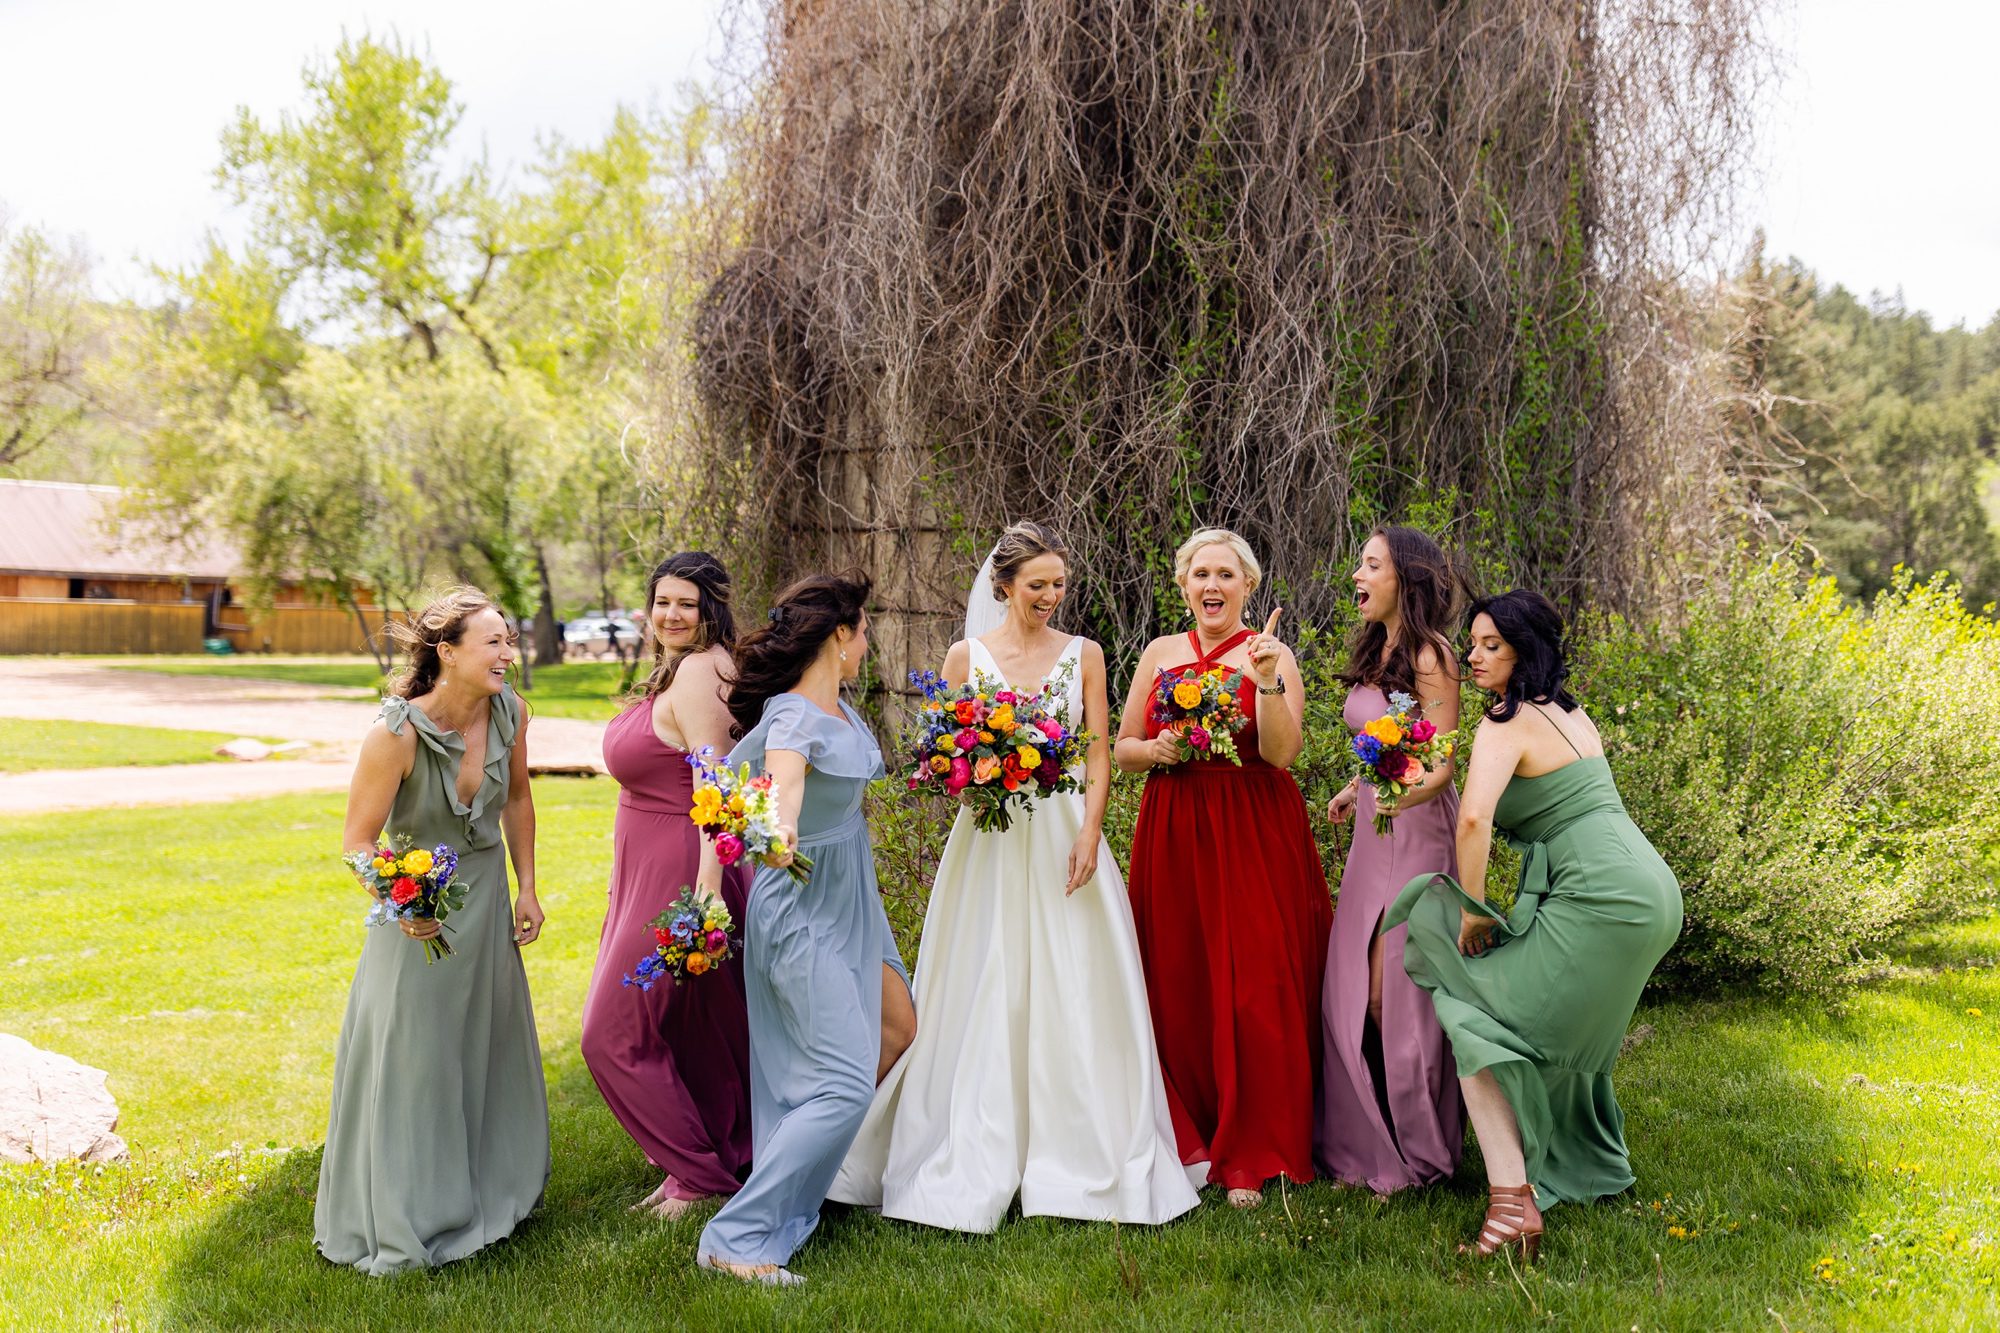 Planet Bluegrass Wedding venue in Lyons Colorado: Colorado Wedding Photographer, Bridesmaid Photos, Bridesmaids dresses, Wedding bouquet, Wedding Flowers, Plume and Furrow